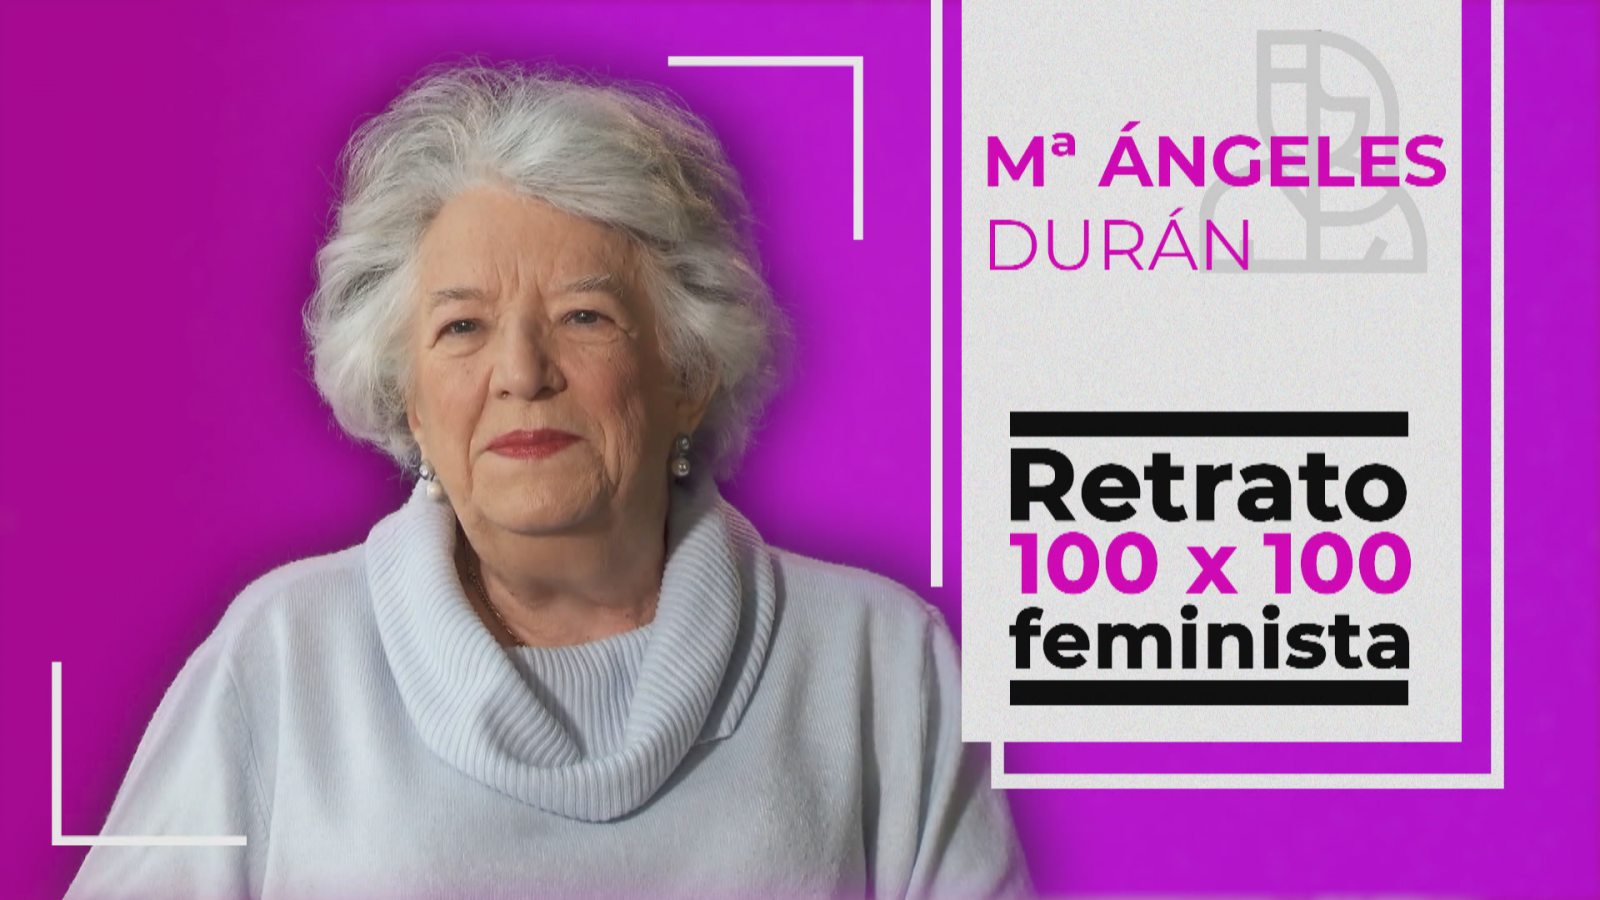 Objetivo Igualdad - Retrato 100x100 feminista: Ángeles Durán, socióloga